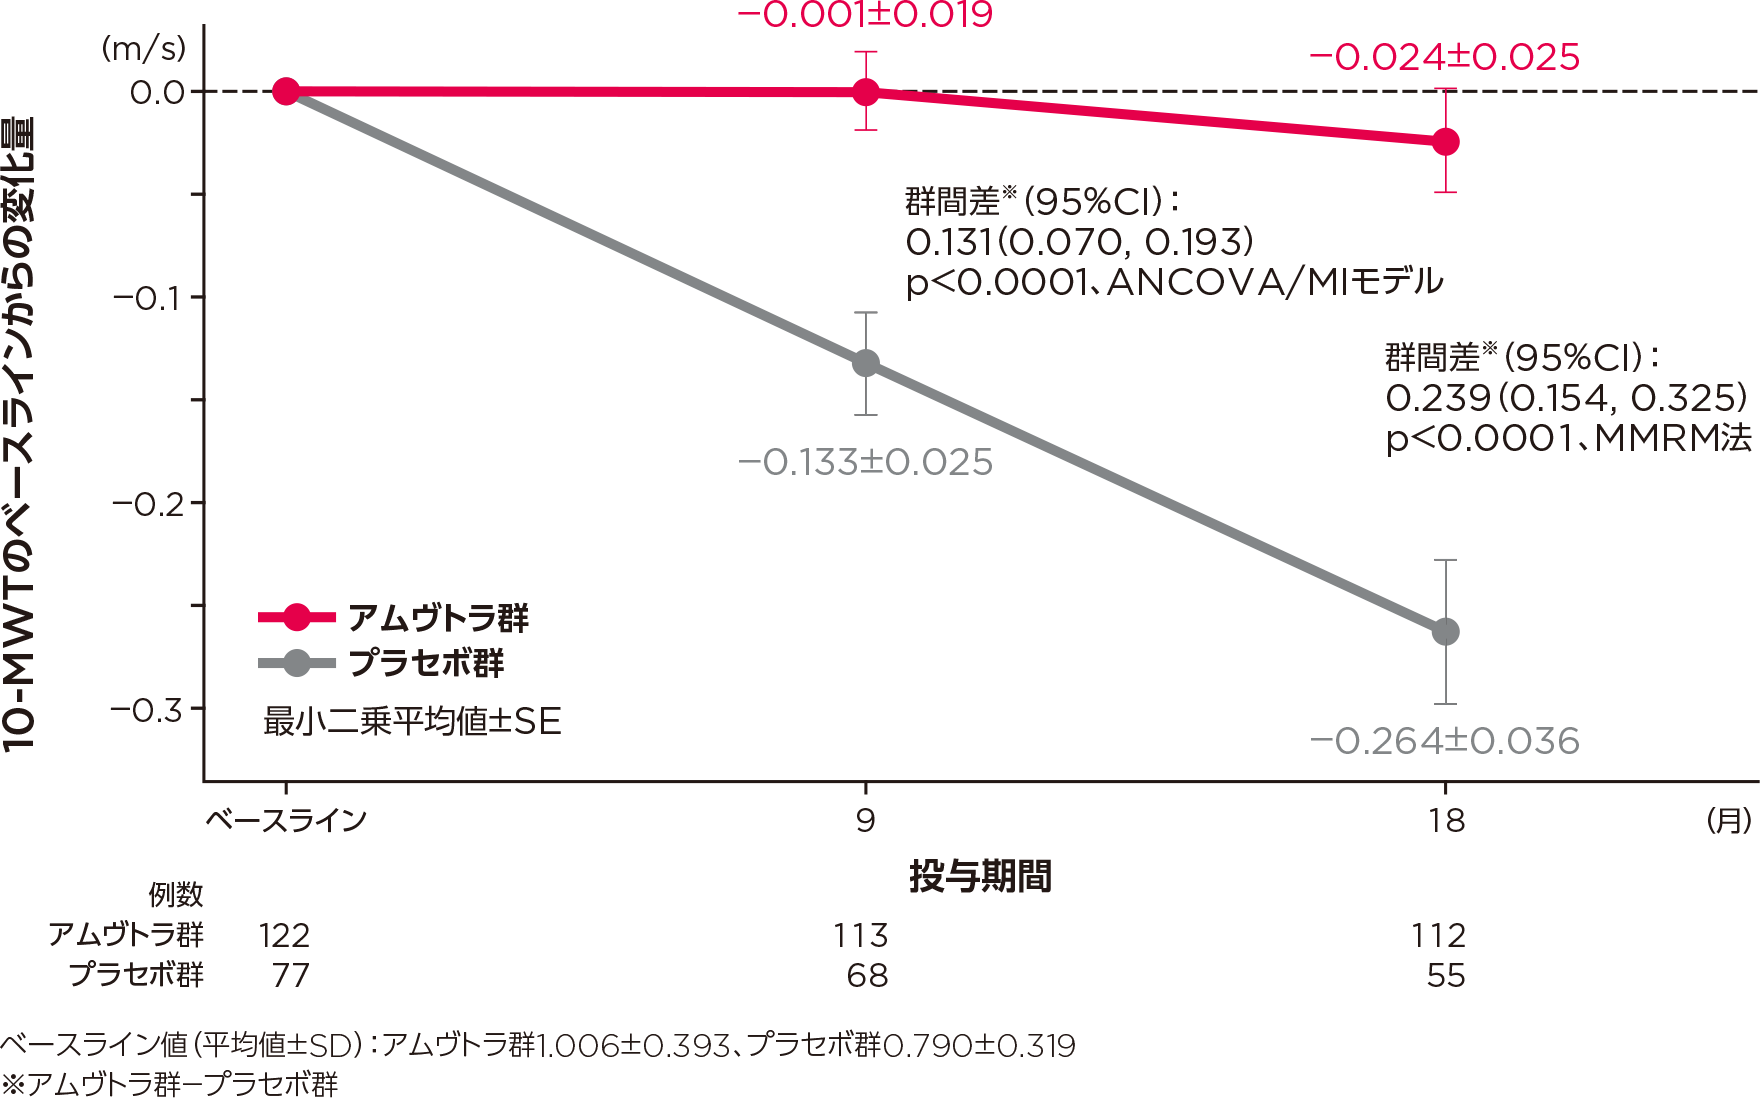 mITT集団における10-MWTのベースラインからの変化量の推移のグラフ